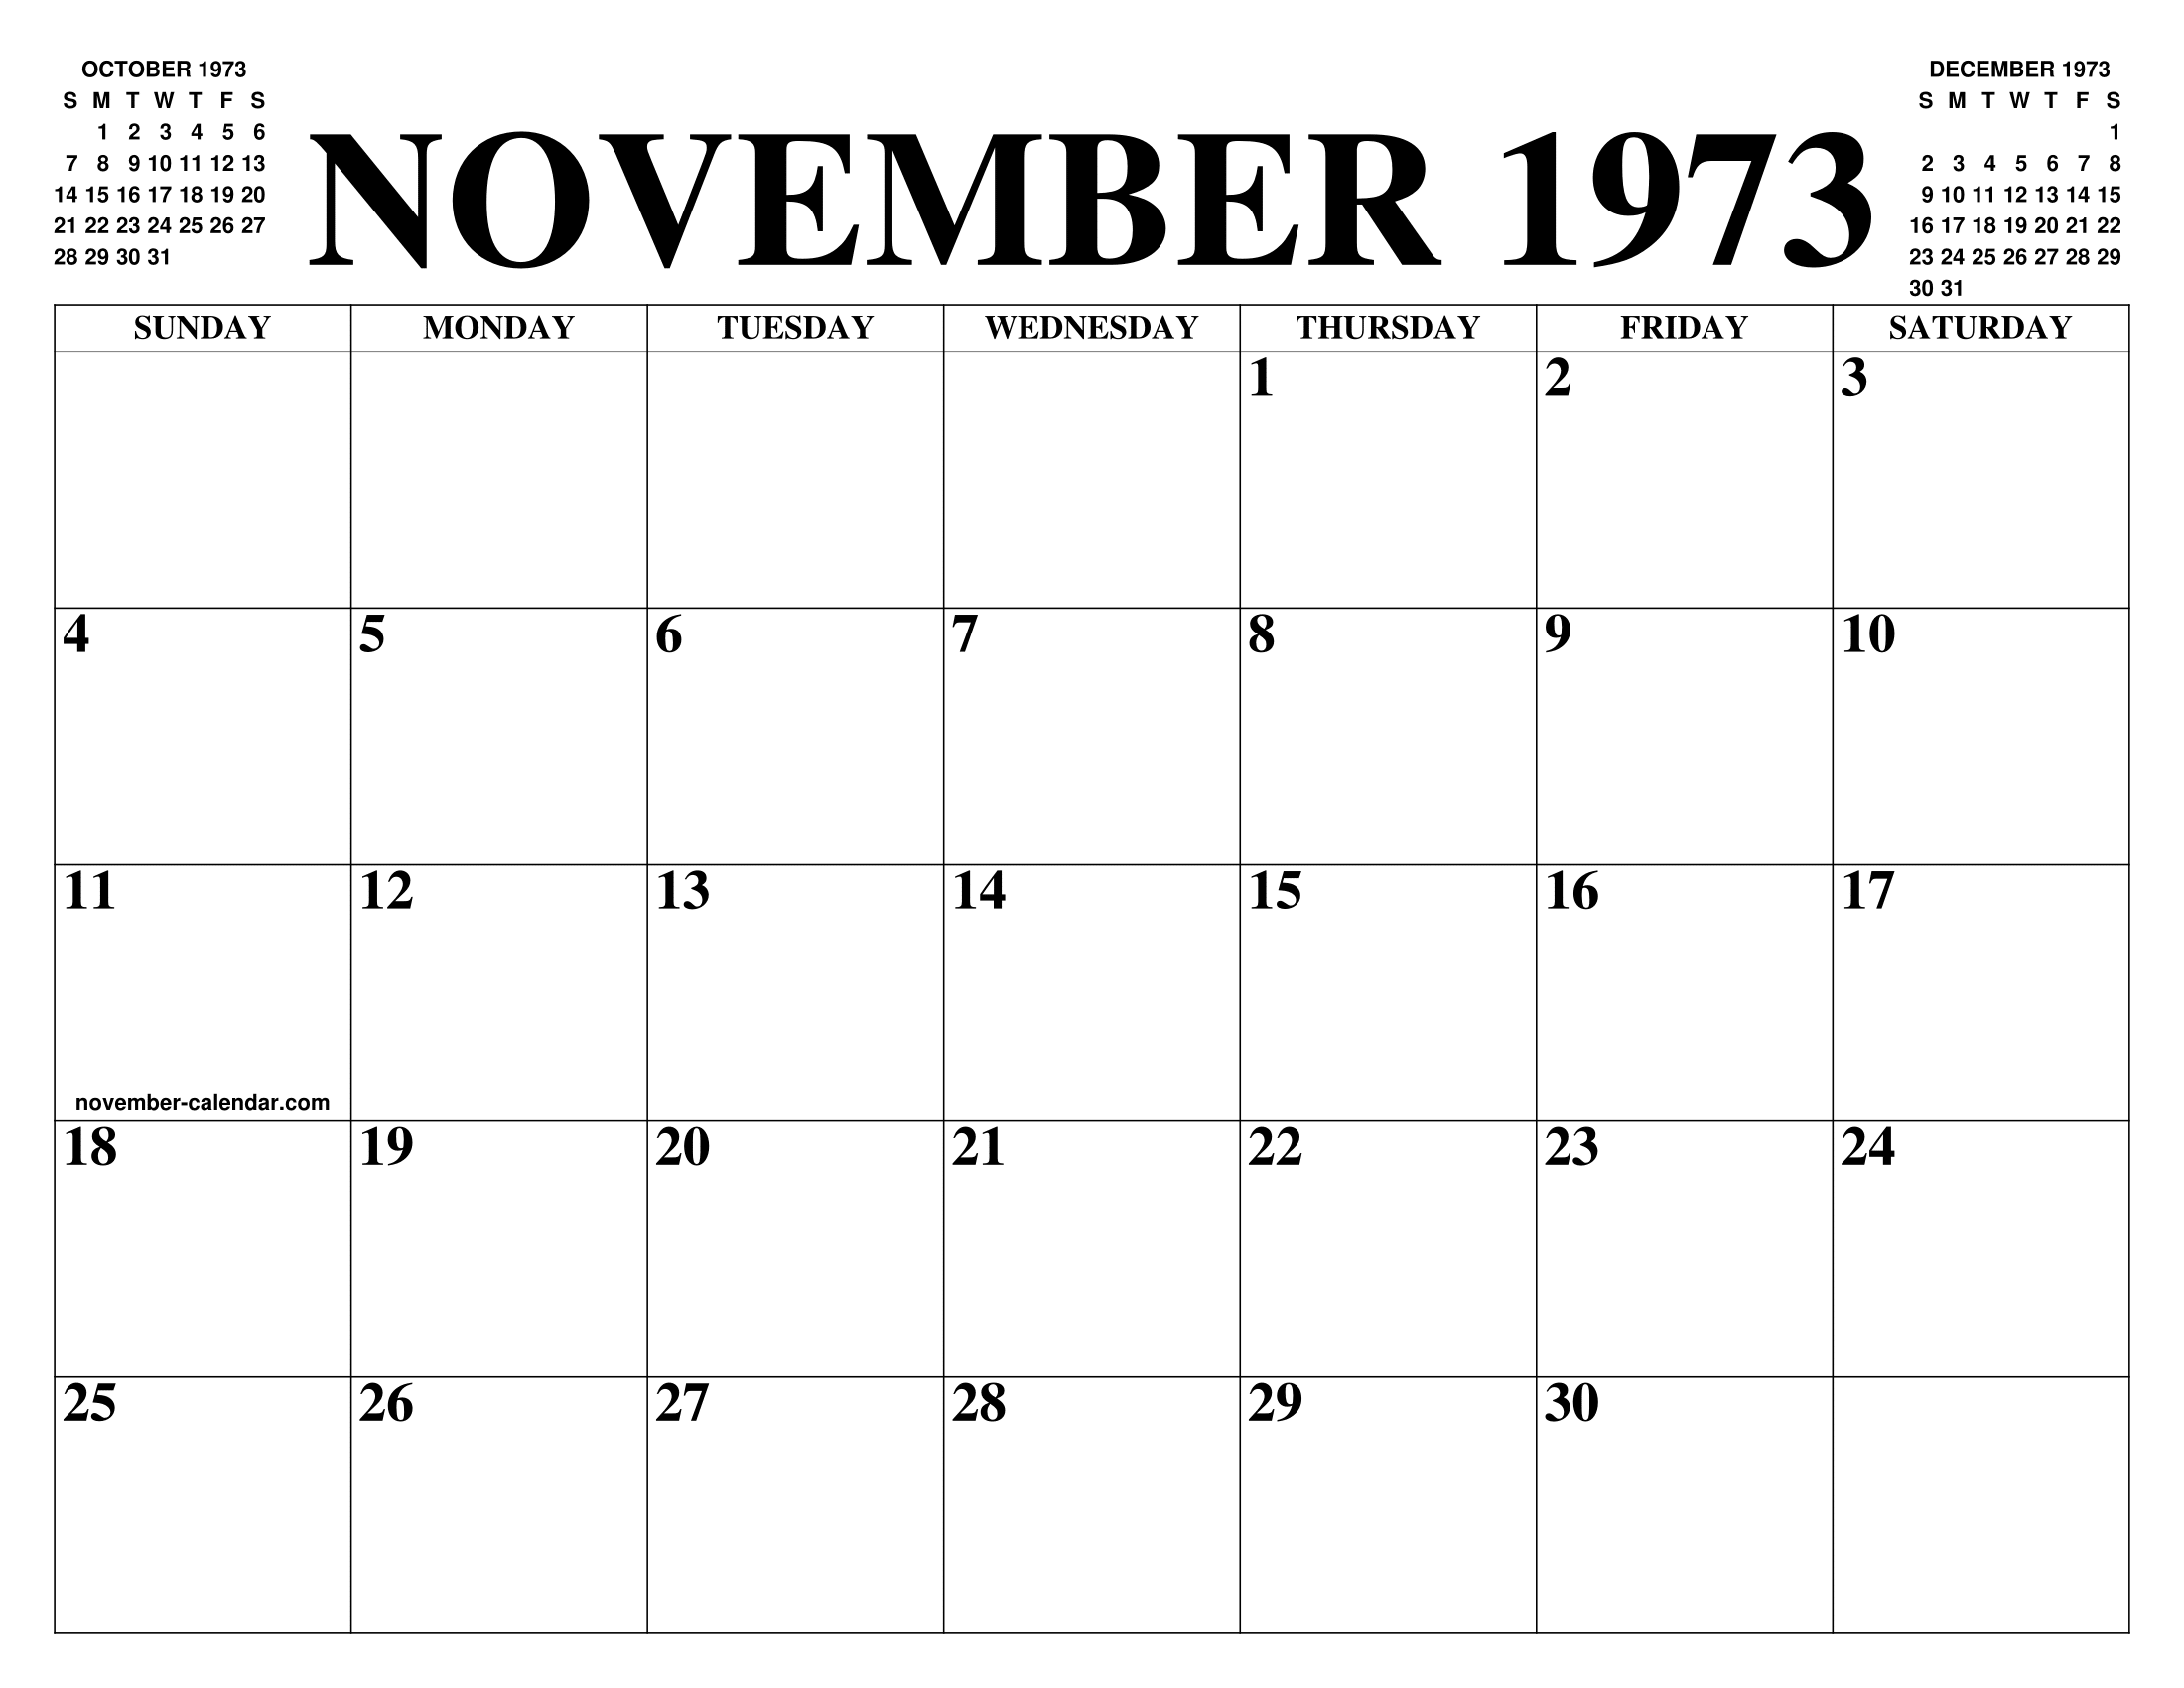 NOVEMBER 1973 CALENDAR OF THE MONTH: FREE PRINTABLE NOVEMBER CALENDAR